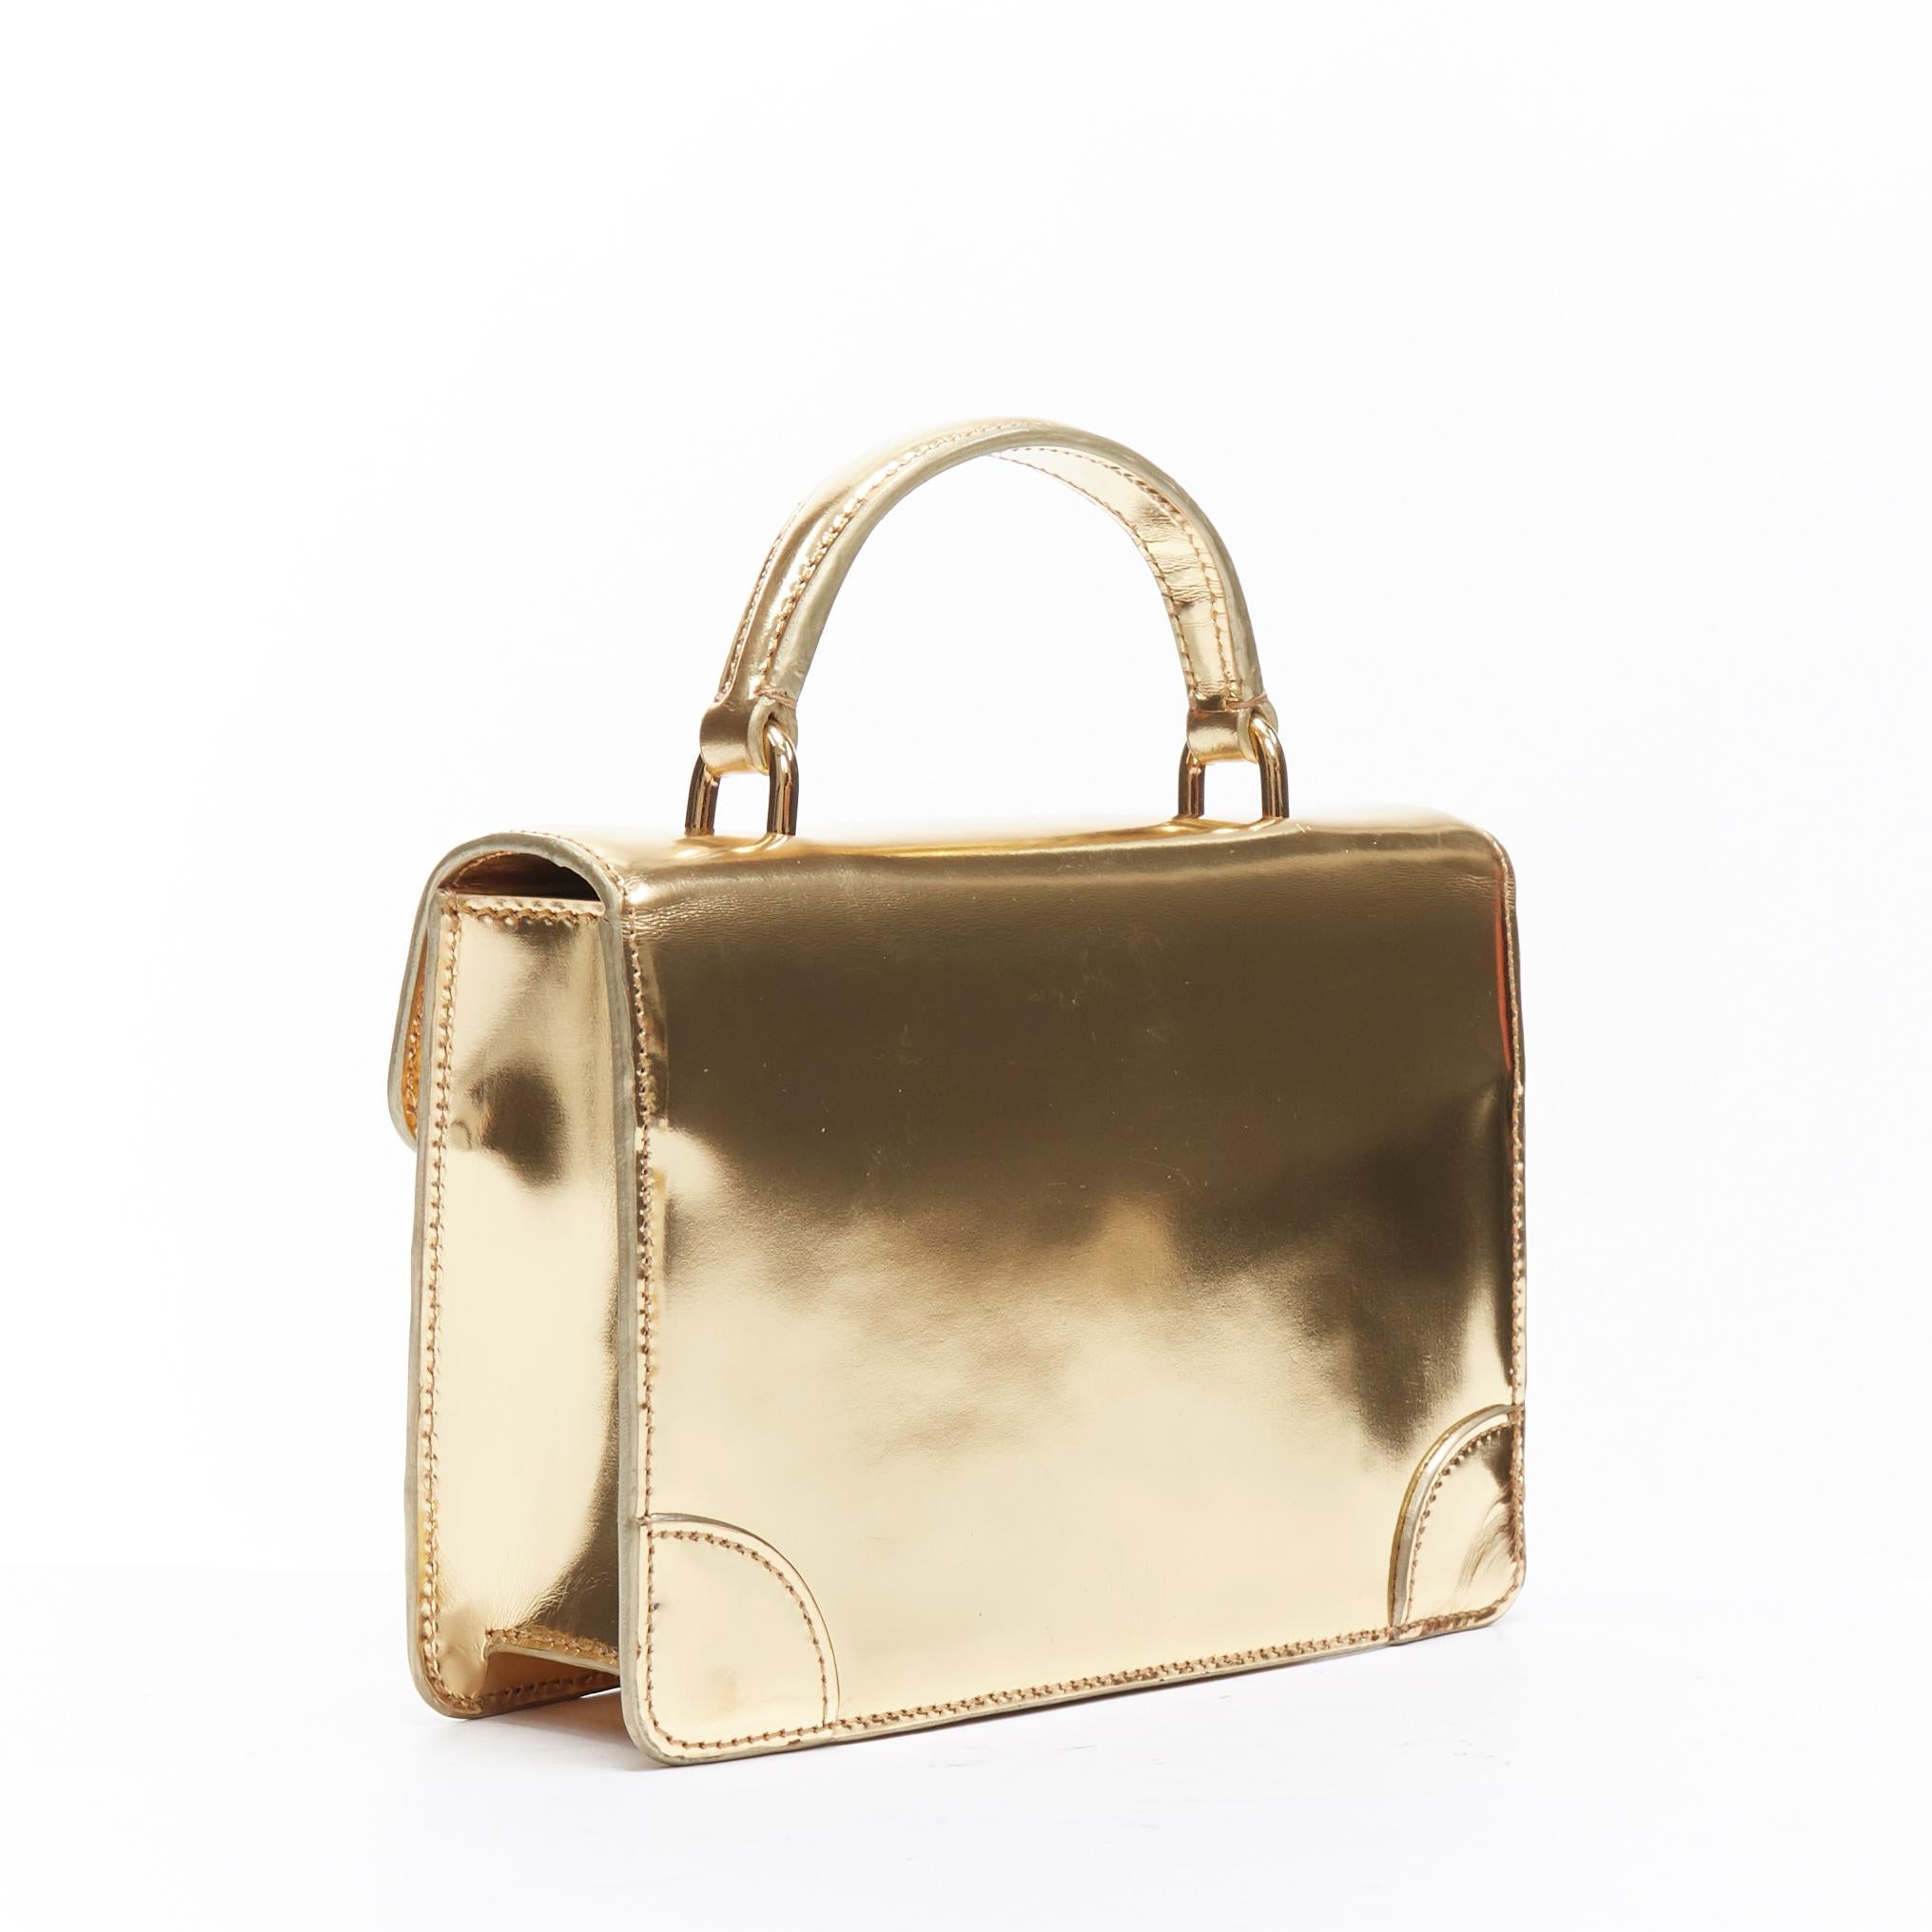 RALPH LAUREN Ricky mirrored gold lock flap leather crossbody small satchel bag 1